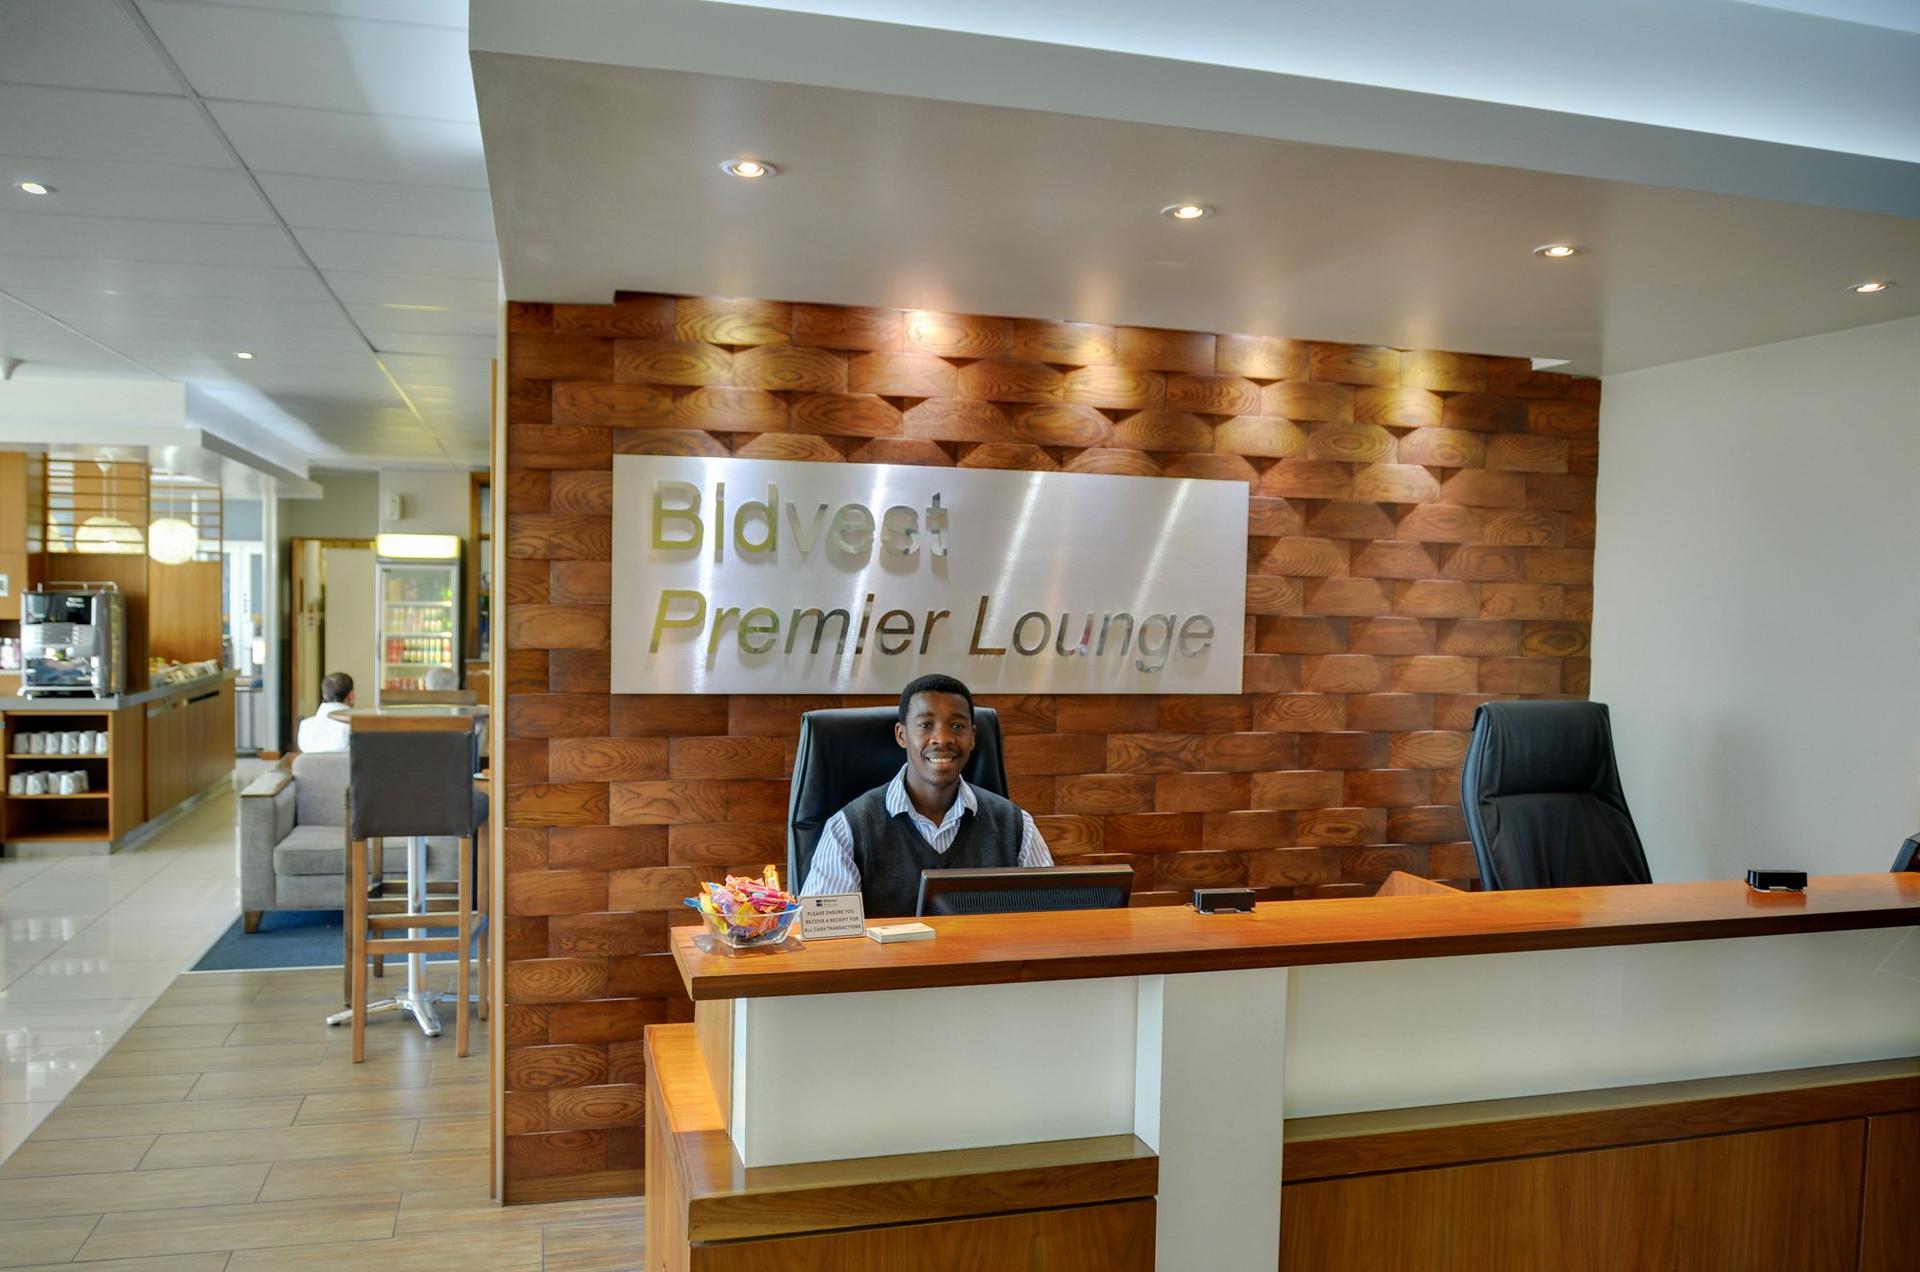 Bidvest Premier Lounge image 14 of 15